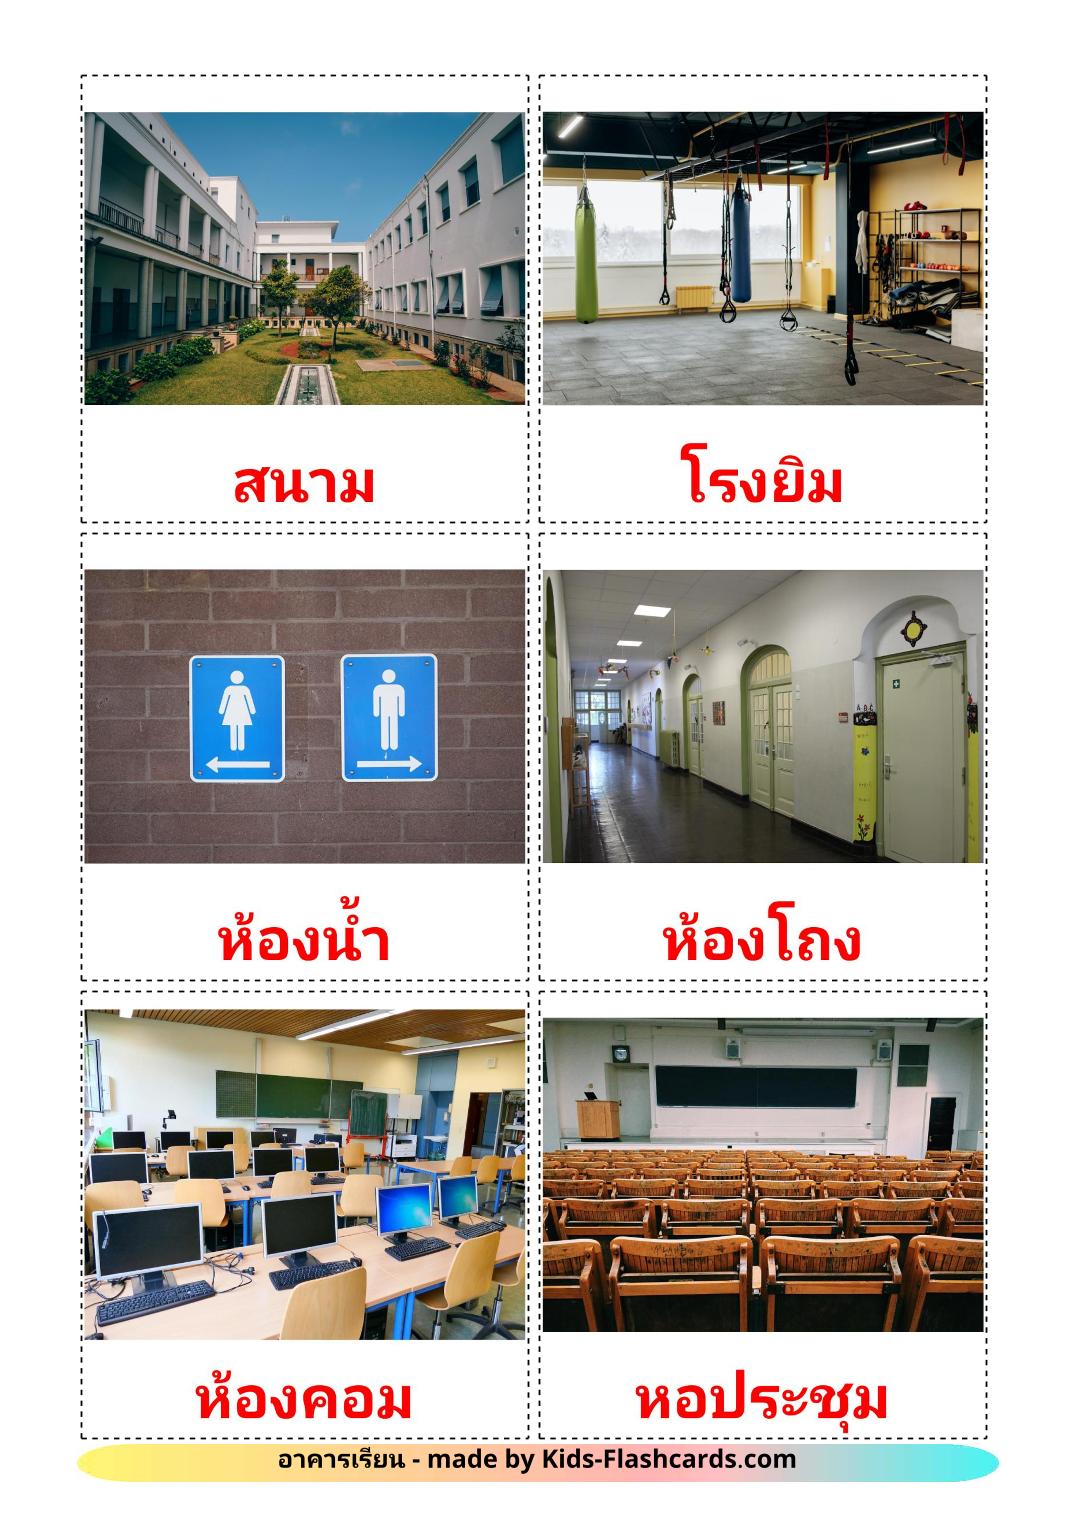 Edificio escolar - 17 fichas de tailandés para imprimir gratis 